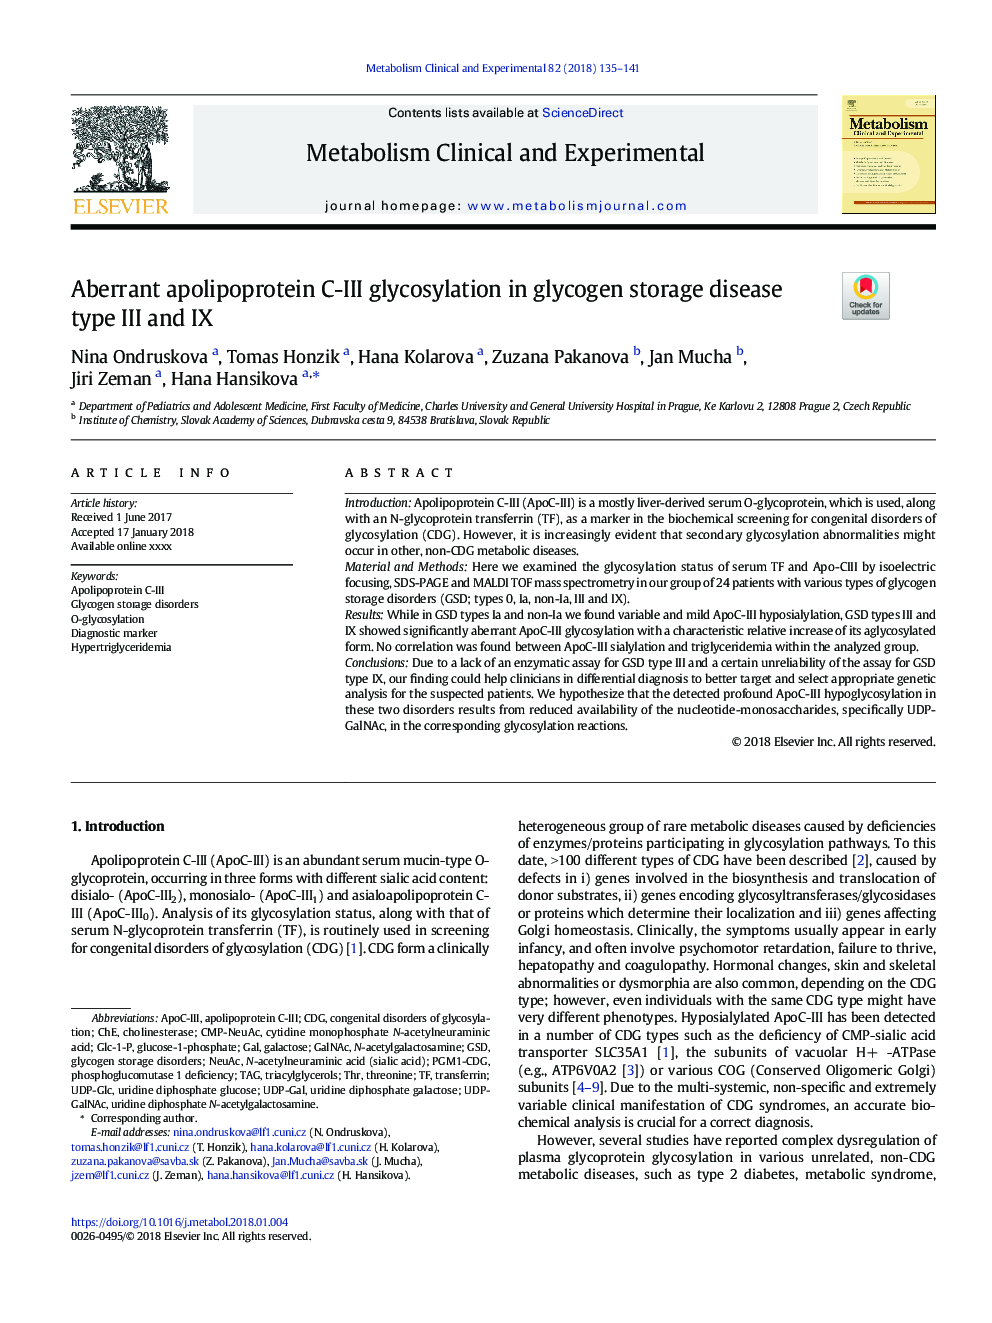 Aberrant apolipoprotein C-III glycosylation in glycogen storage disease type III and IX